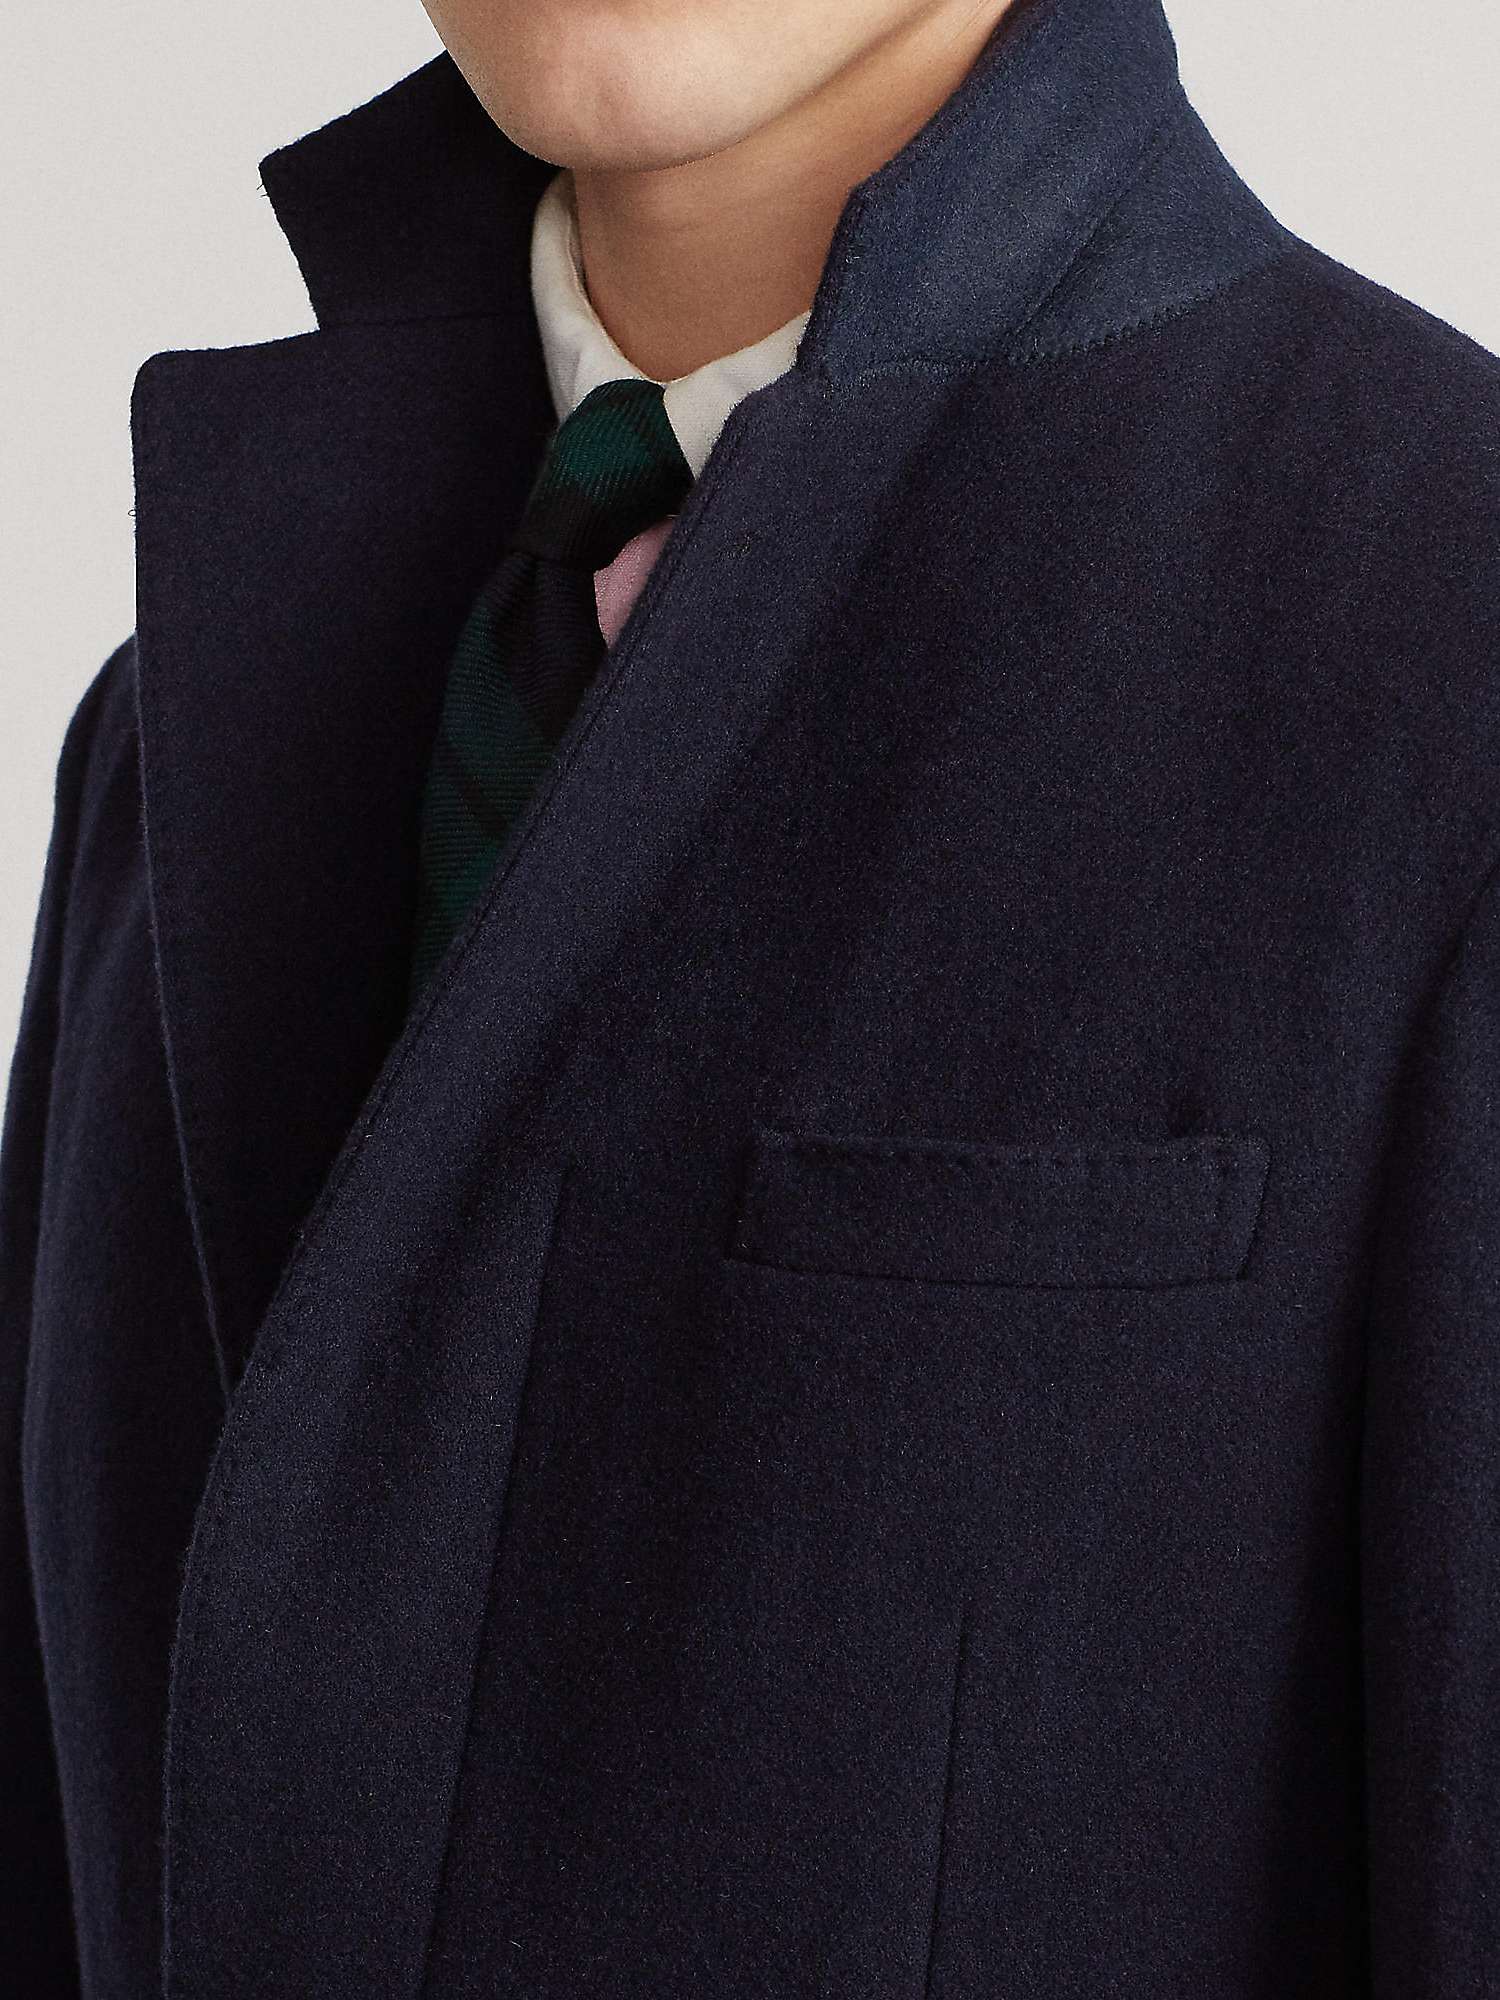 Polo Ralph Lauren Paddock Wool Blend Tailored Coat, Navy/Blackwatch at